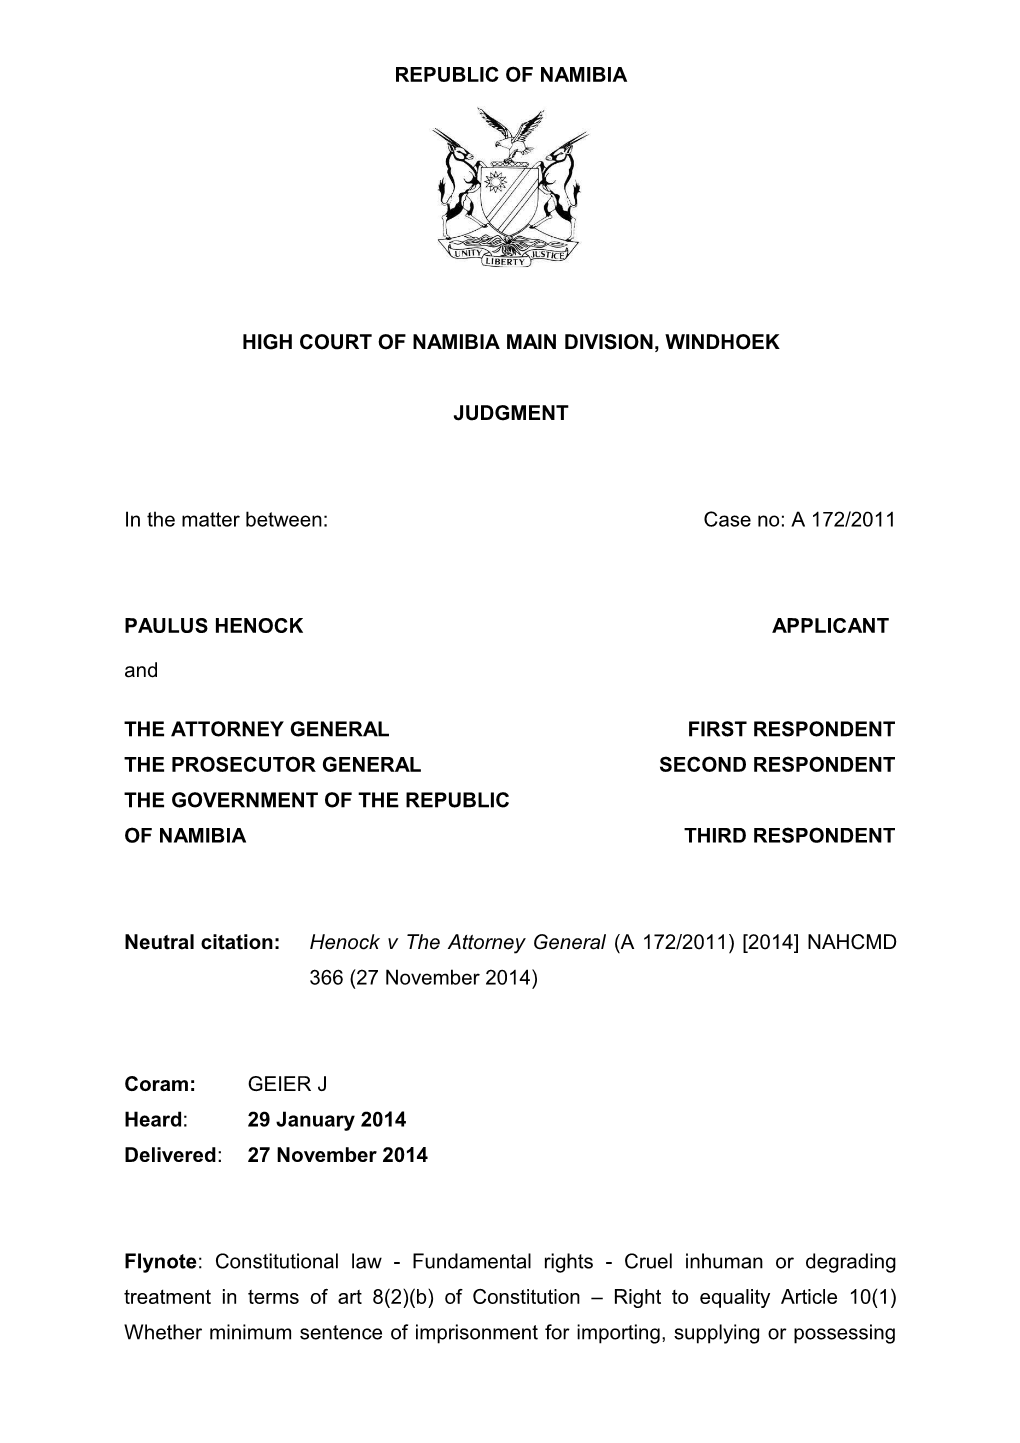 Henock V the Attorney General (A 172-2011) 2014 NAHCMD 366 (27 November 2014)